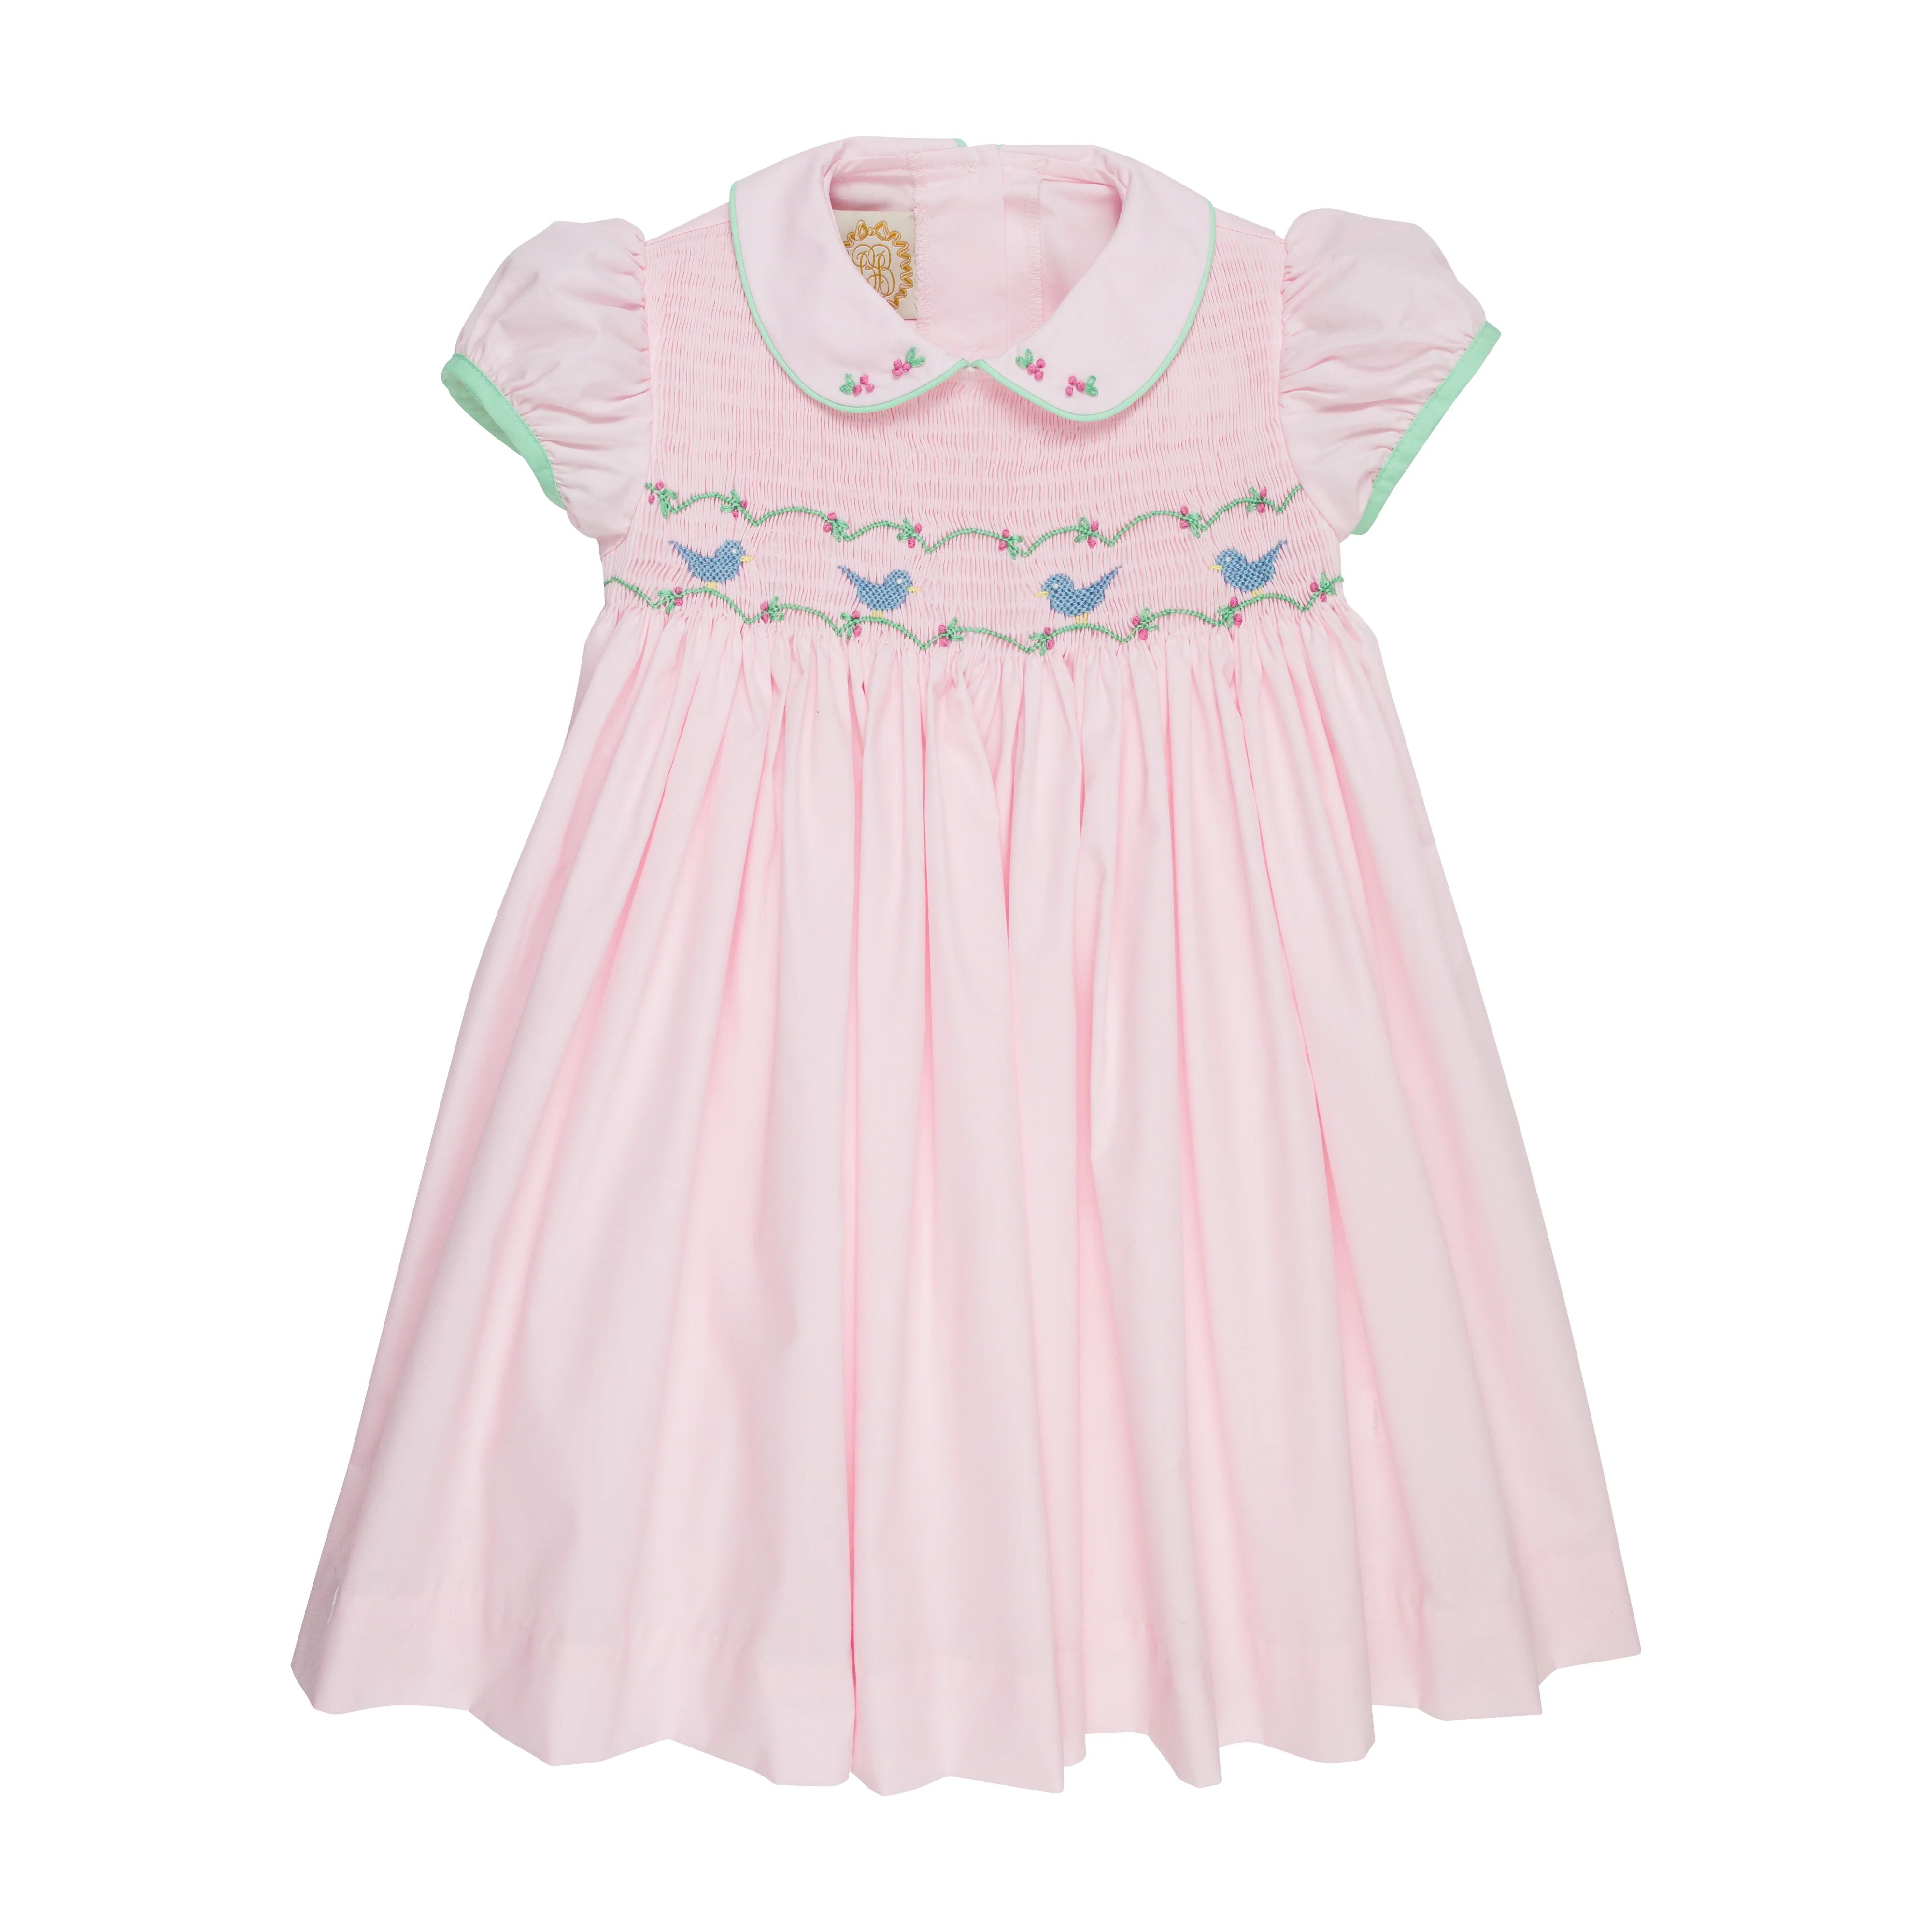 Dottie Hart Dress - Palm Beach Pink & Grace Bay Green with Bluebird Smocking | The Beaufort Bonnet Company